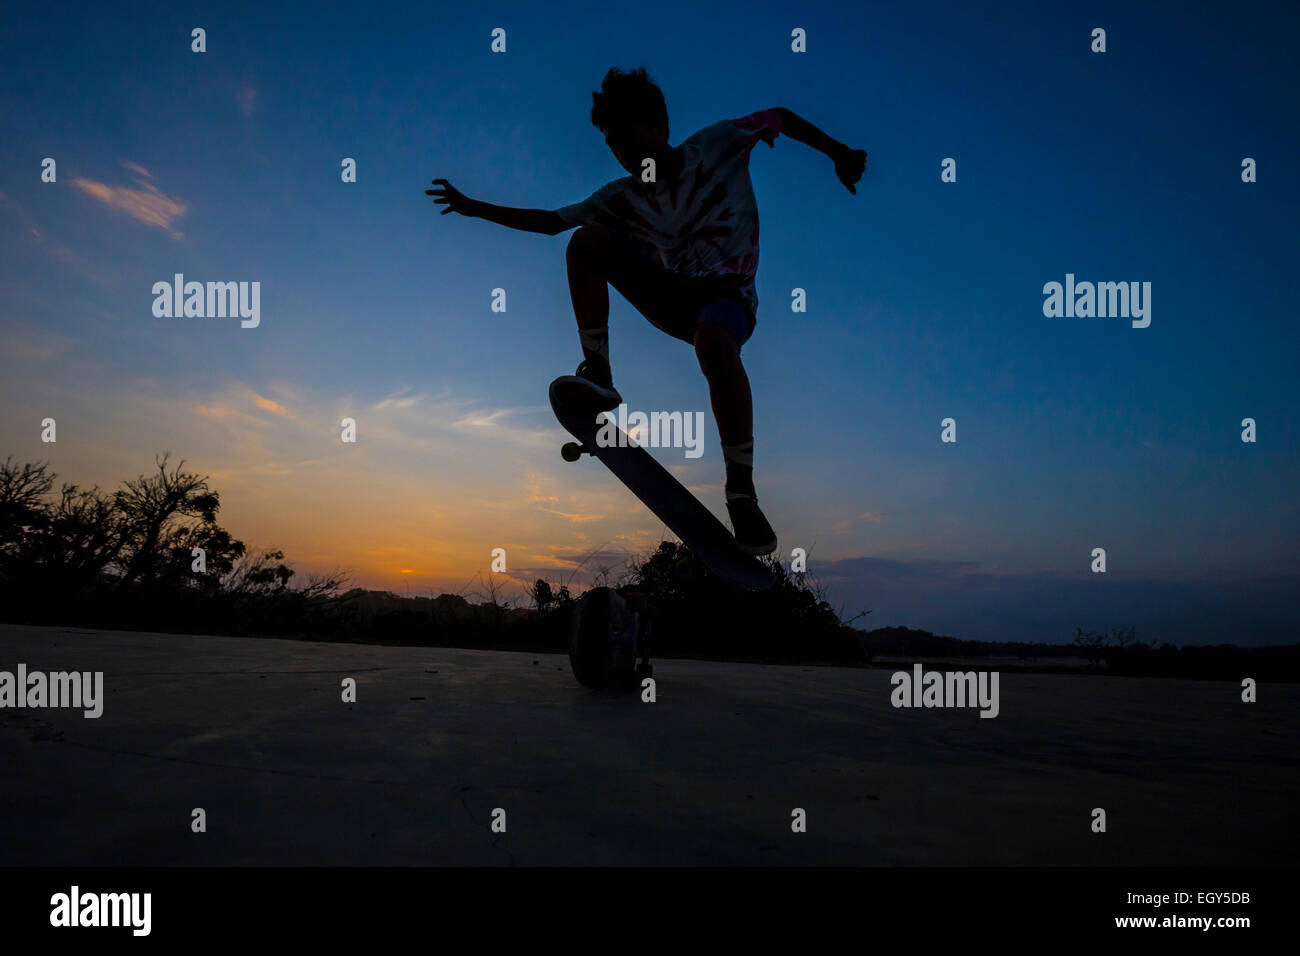 Man jumping on skateboard in sunset.Bali.Indonesia. Stock Photo